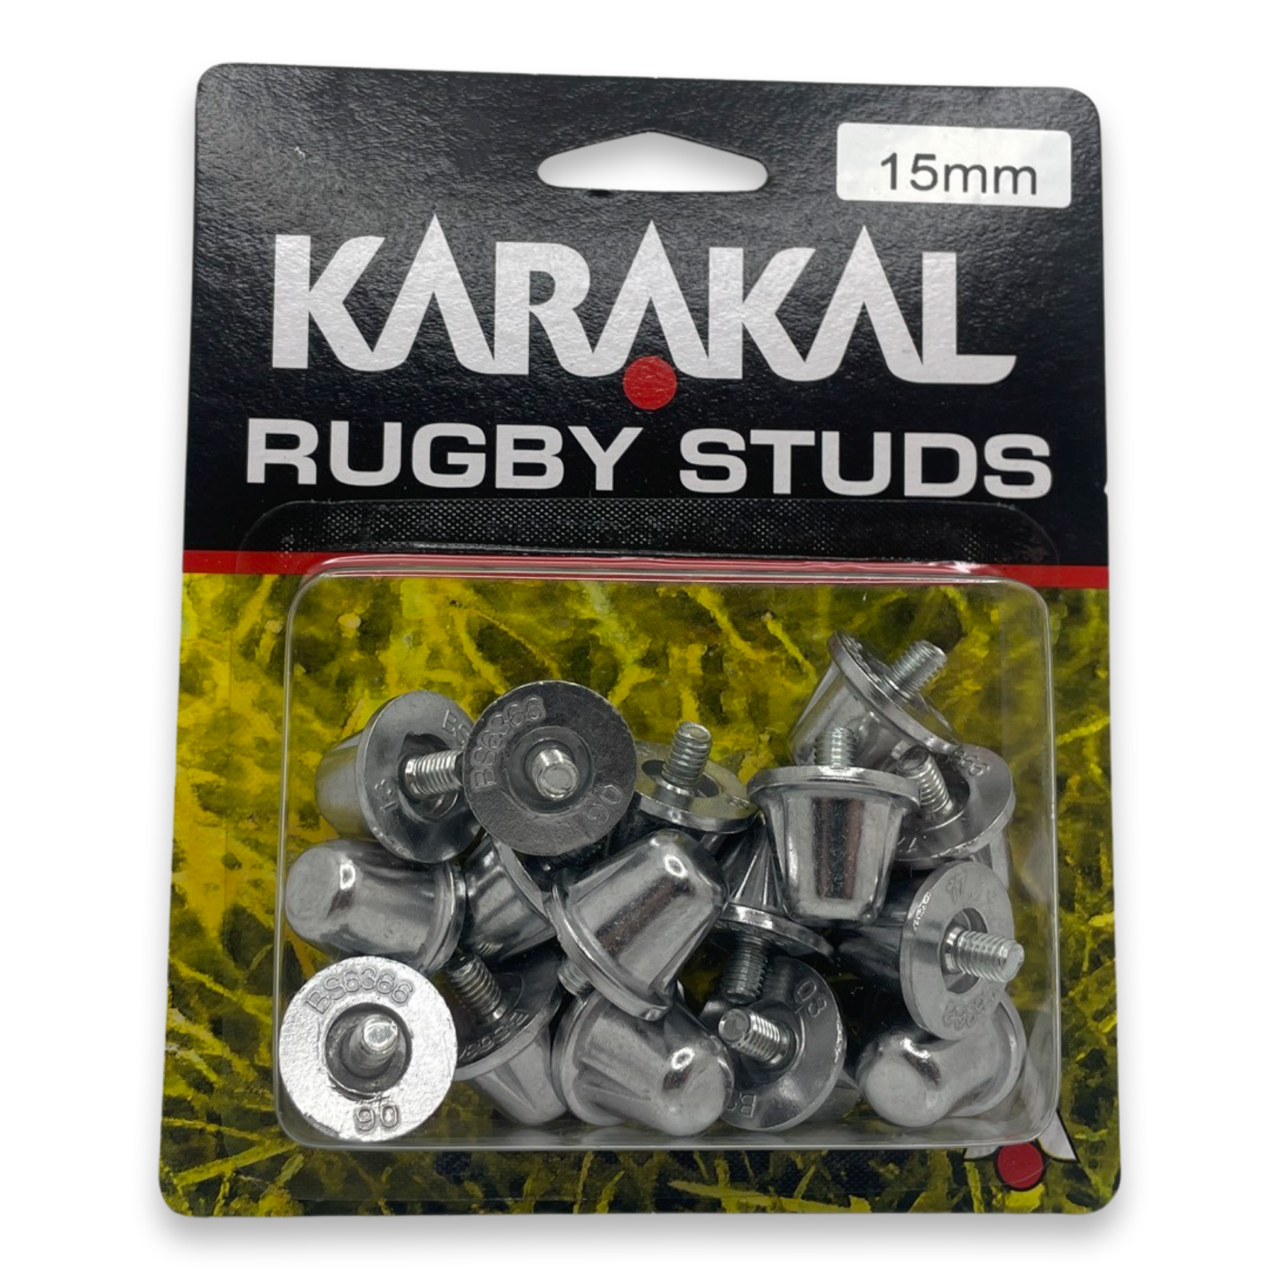 Karakal Rugby Studs 15mm